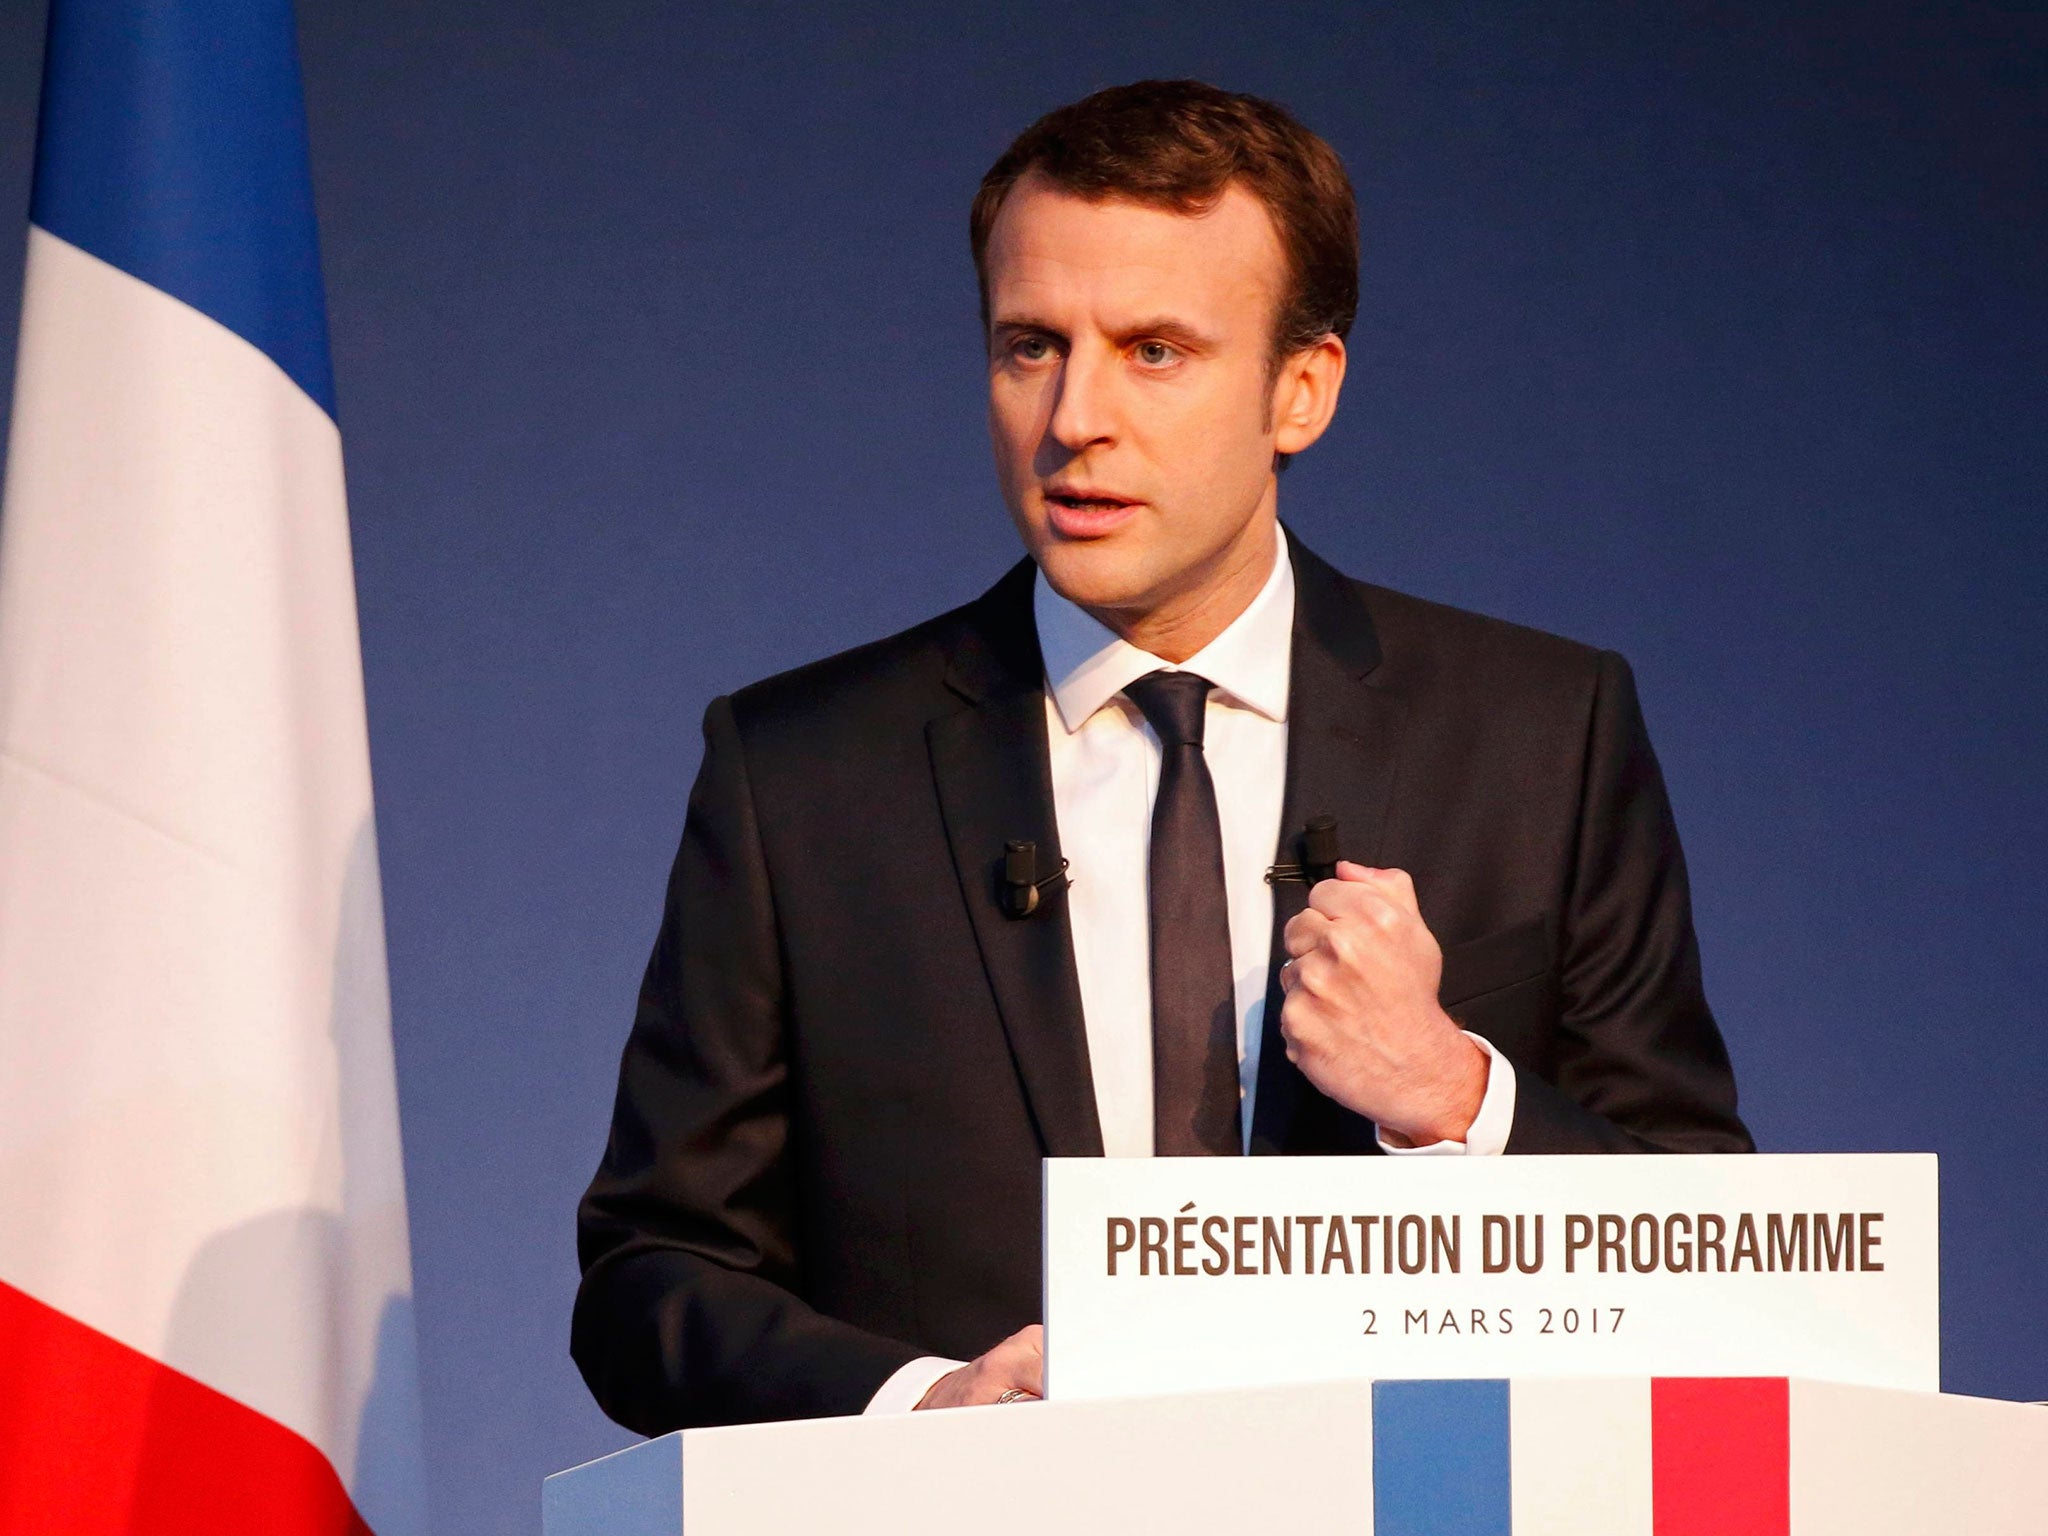 Emmanuel Macron unveils his election manifesto in Paris on 2 March